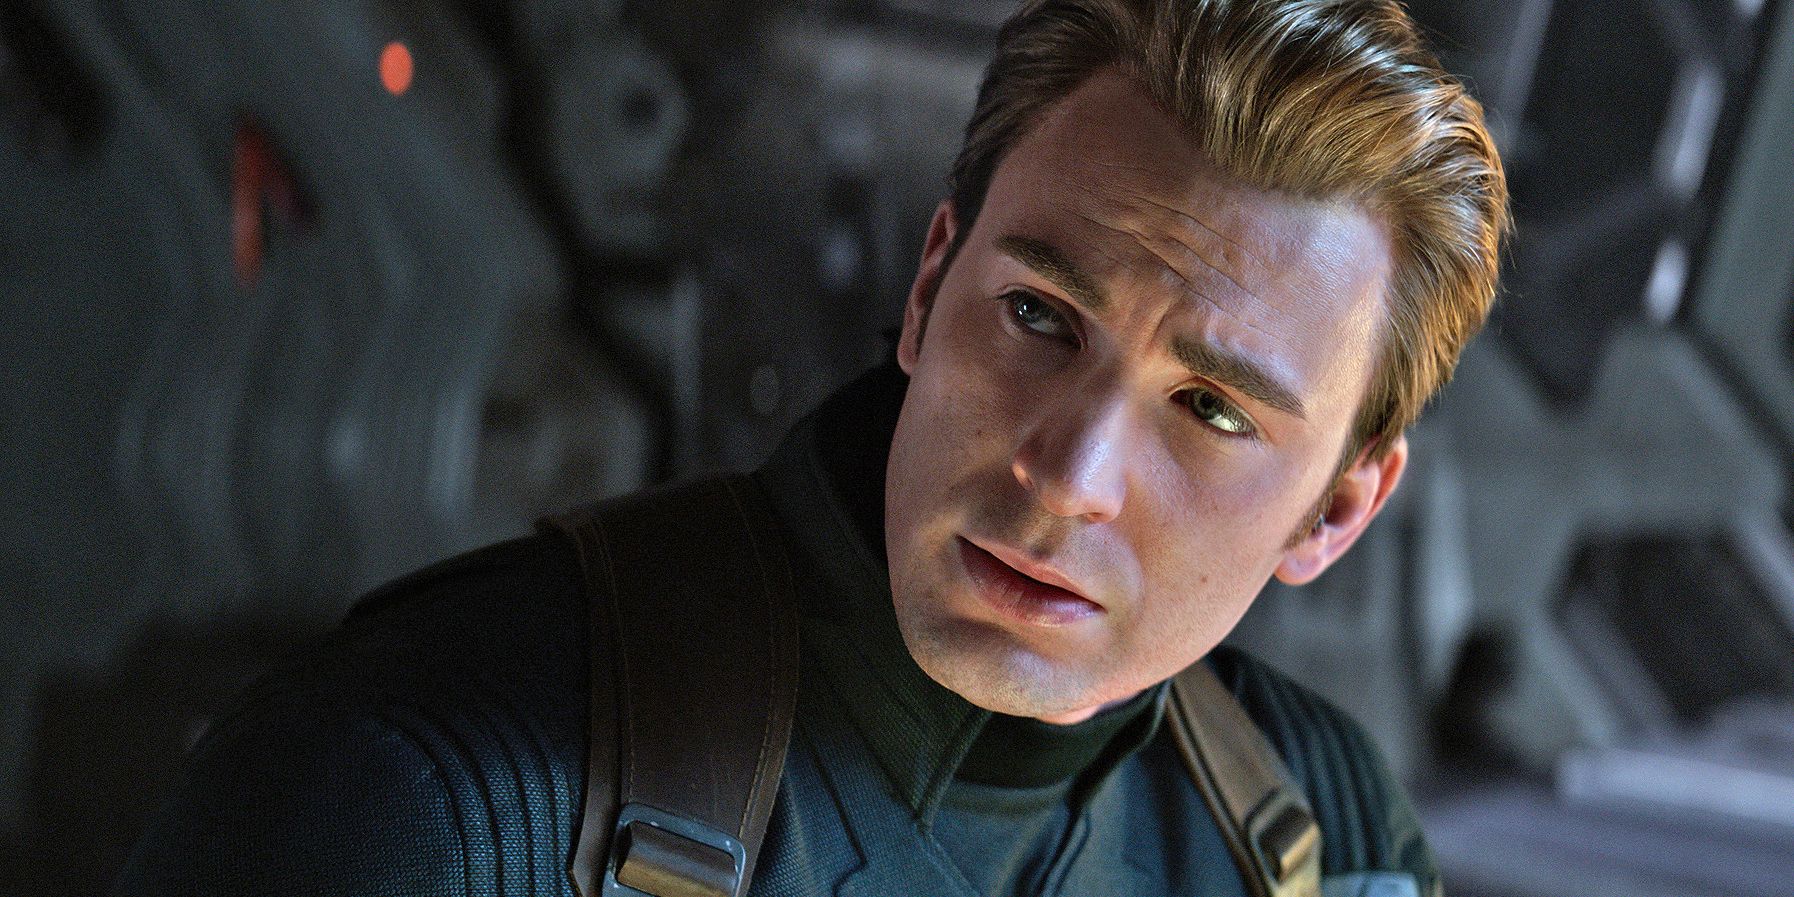 Chris Evans as Steve Rogers: Captain America